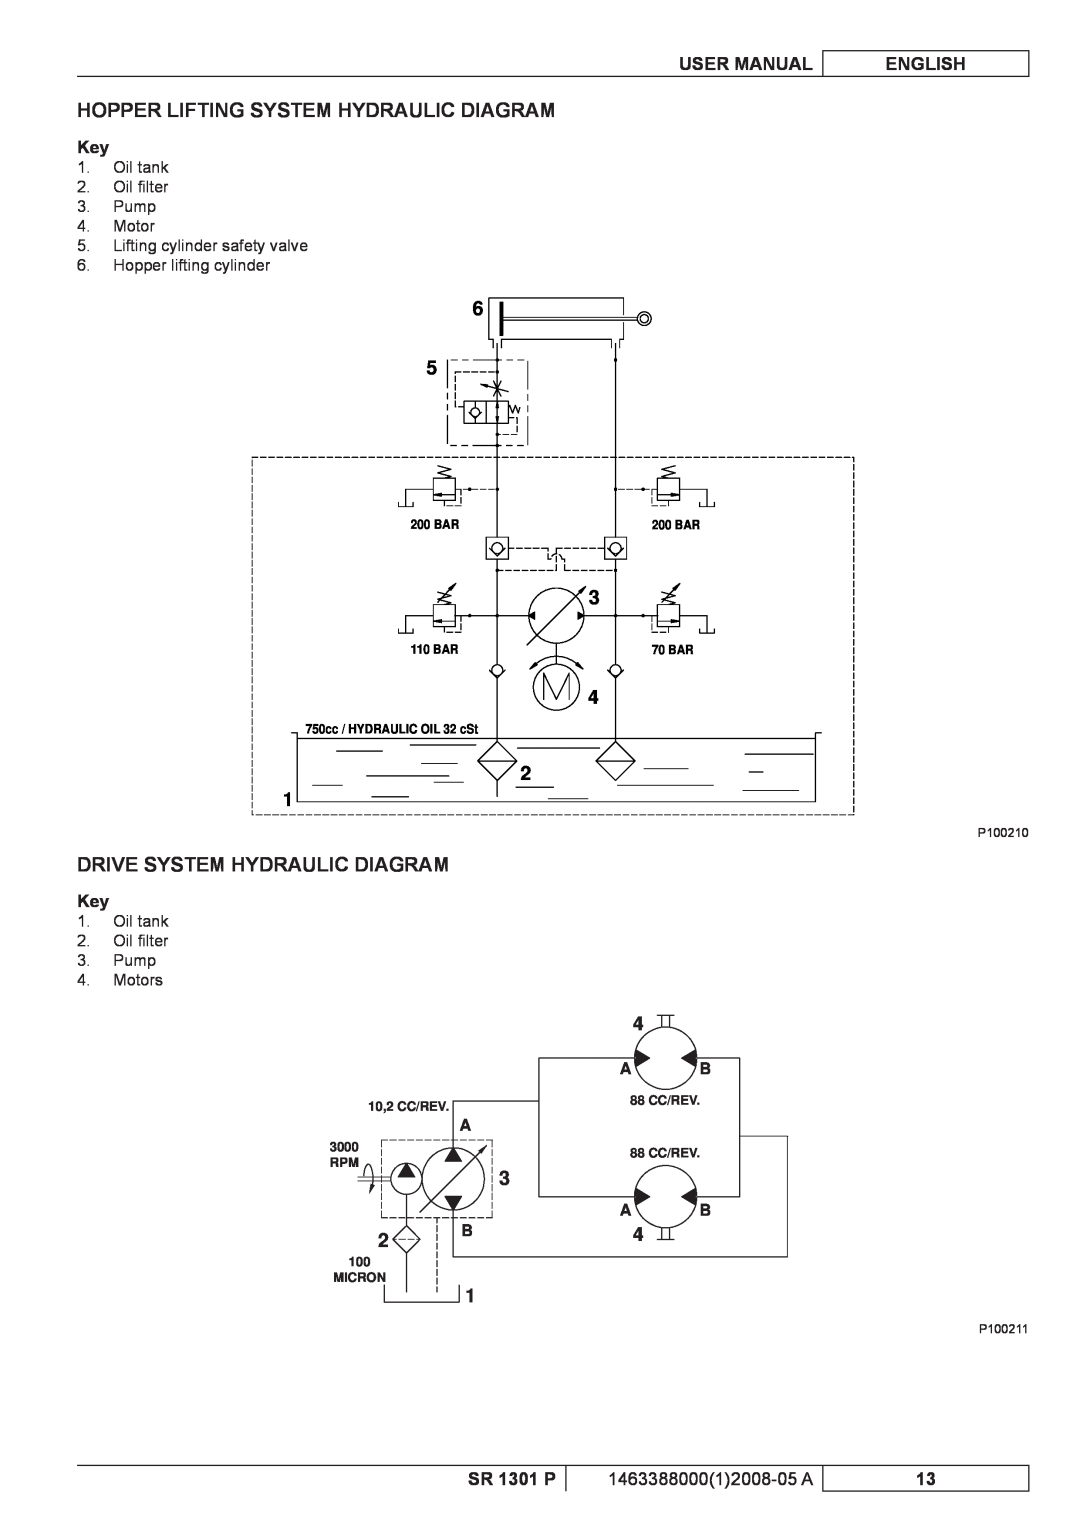 Nilfisk-ALTO SR 1301 P Hopper Lifting System Hydraulic Diagram, Drive System Hydraulic Diagram, User Manual, English, A B 